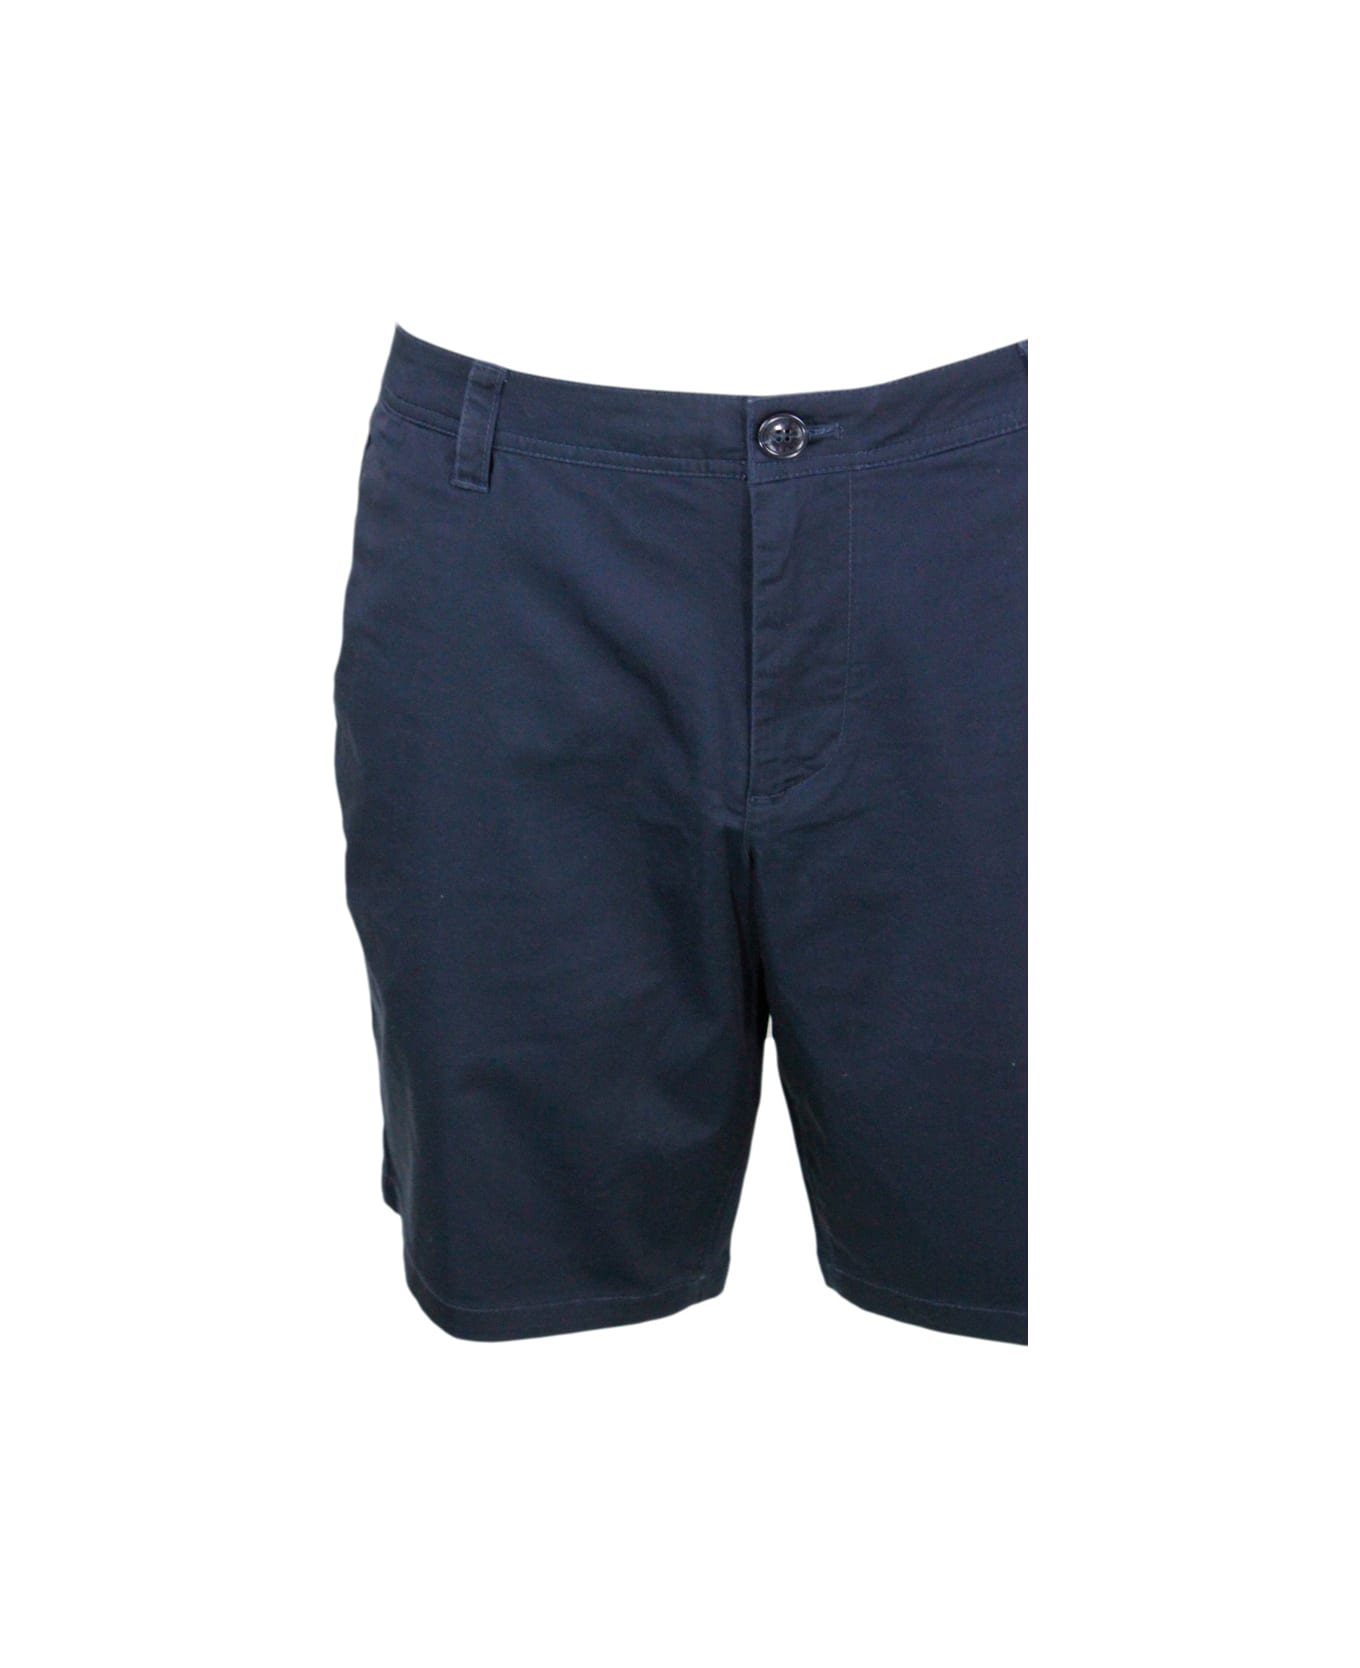 Armani Collezioni Stretch Cotton Bermuda Shorts With Welt Pockets And Zip And Button Closure - Blu